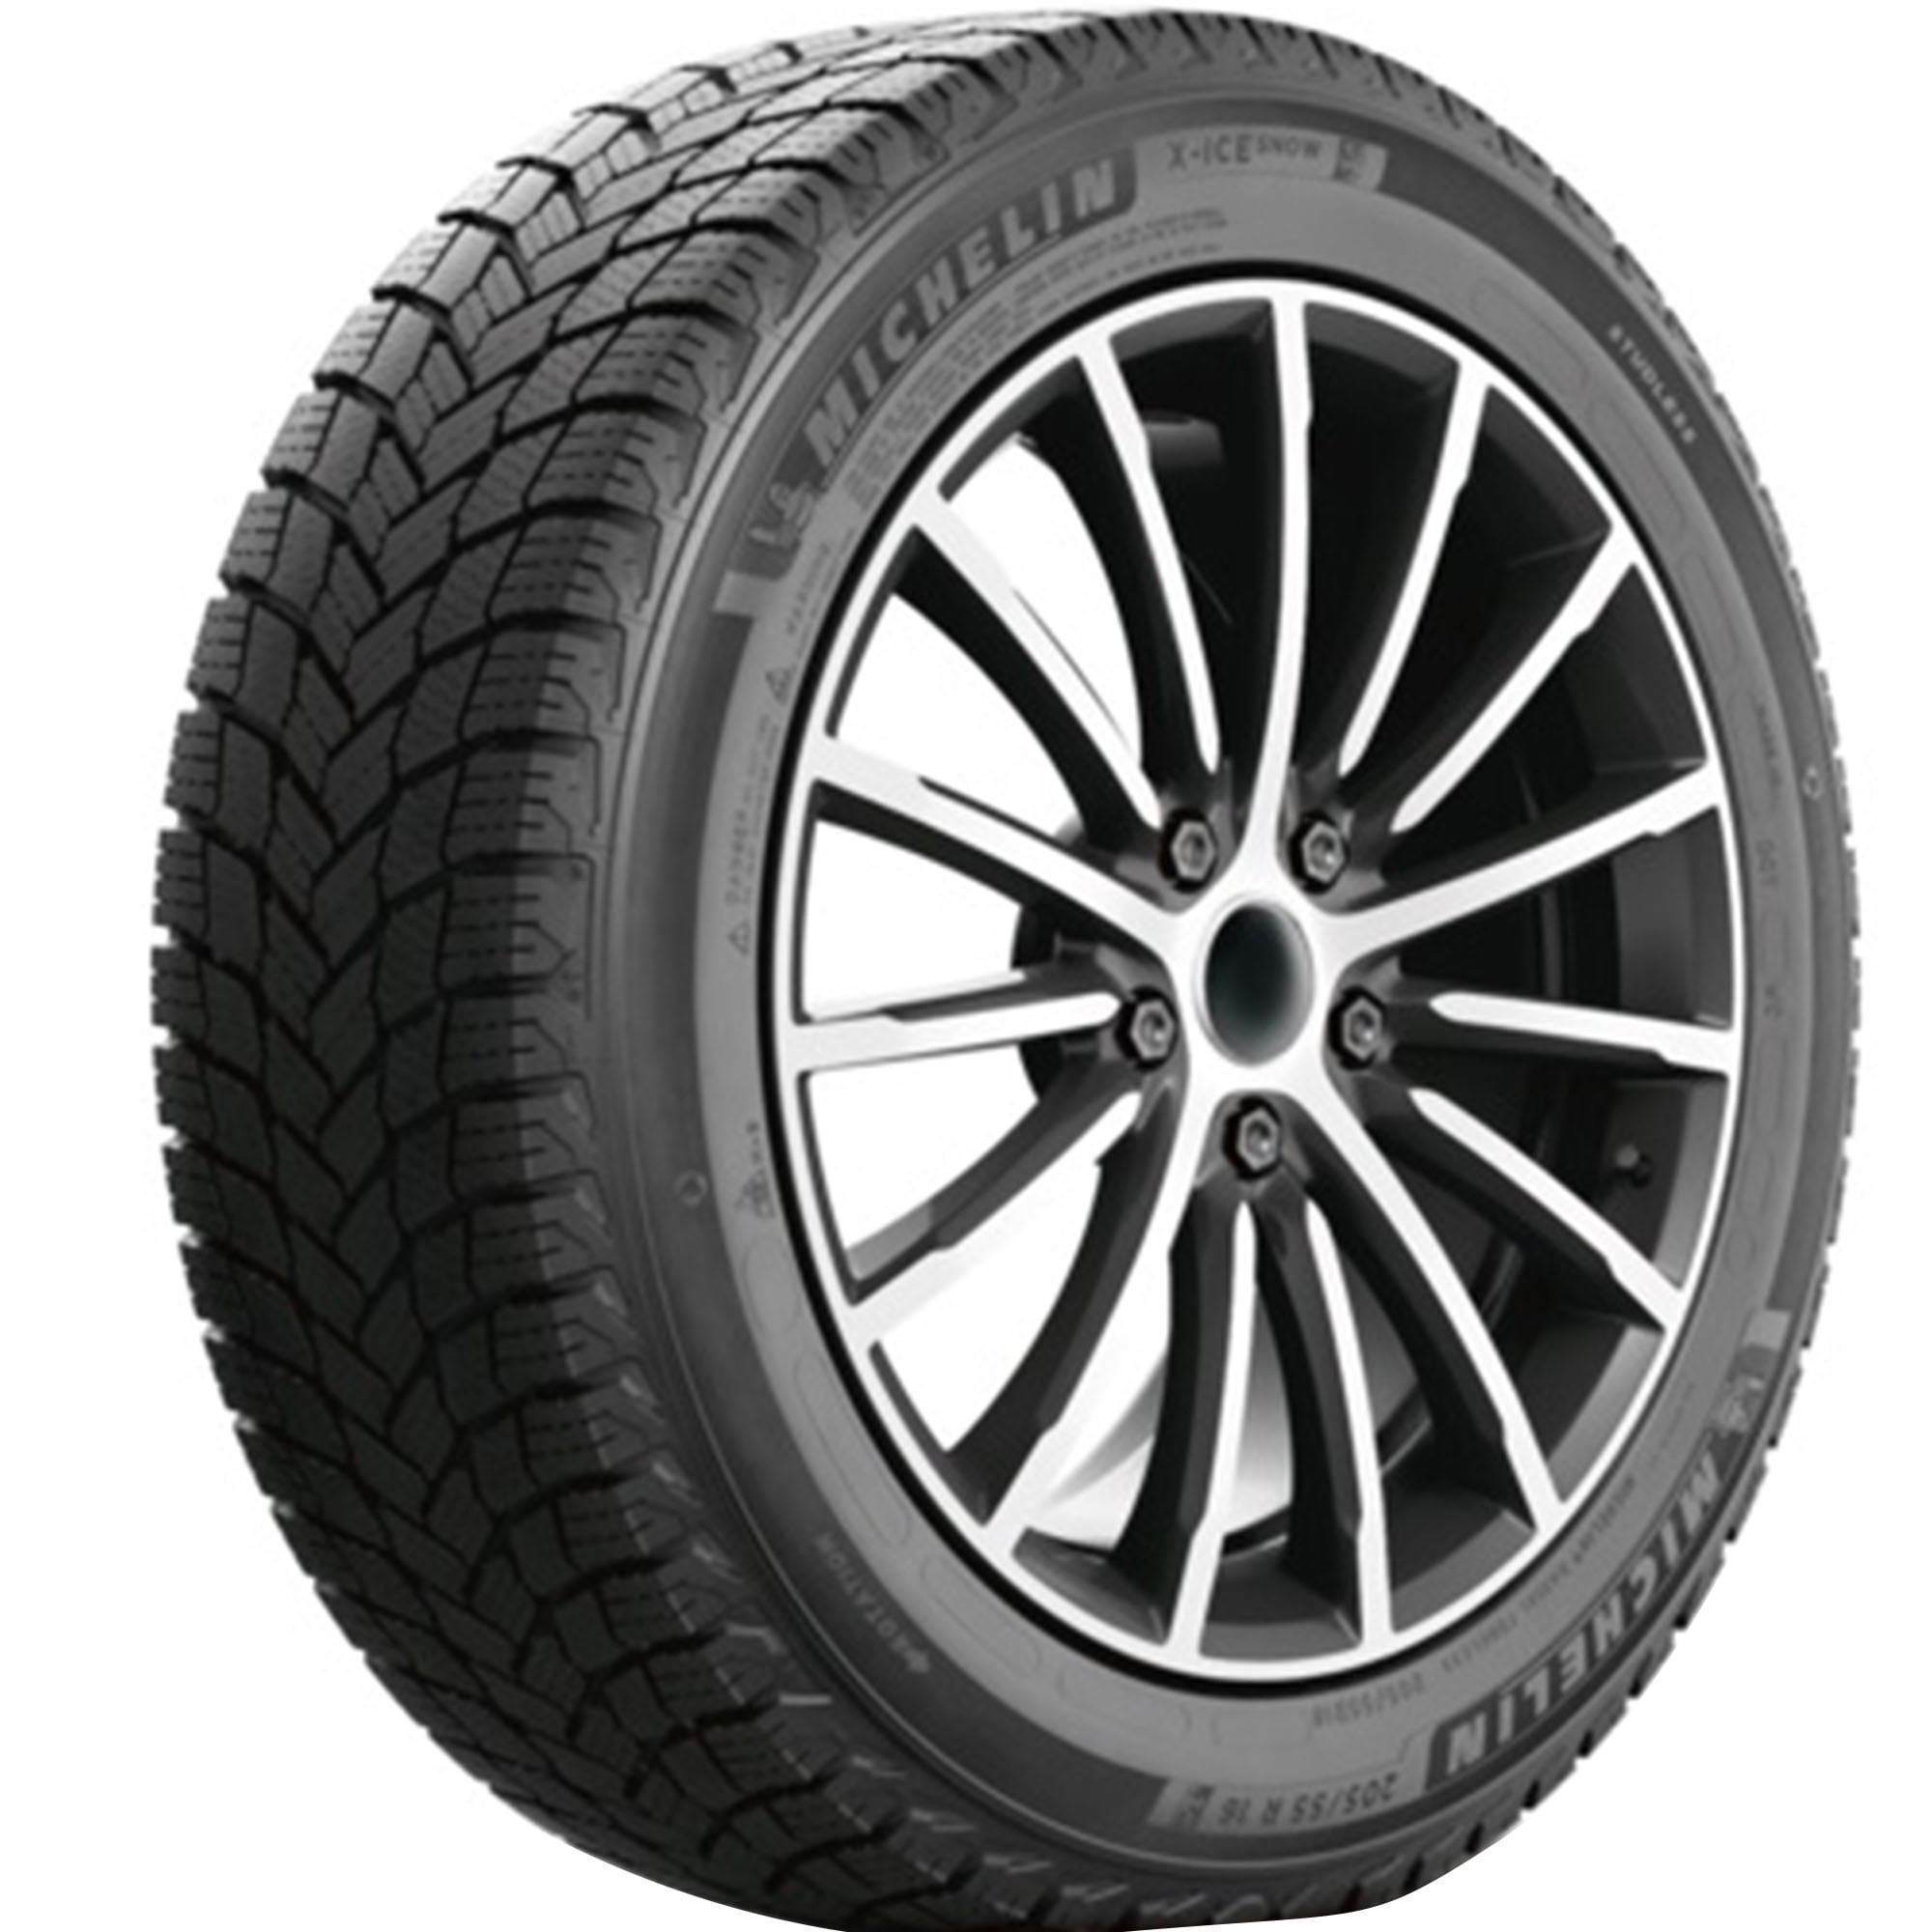 XL X-Ice 99T 205/65R16 Snow Michelin Tire Passenger Winter